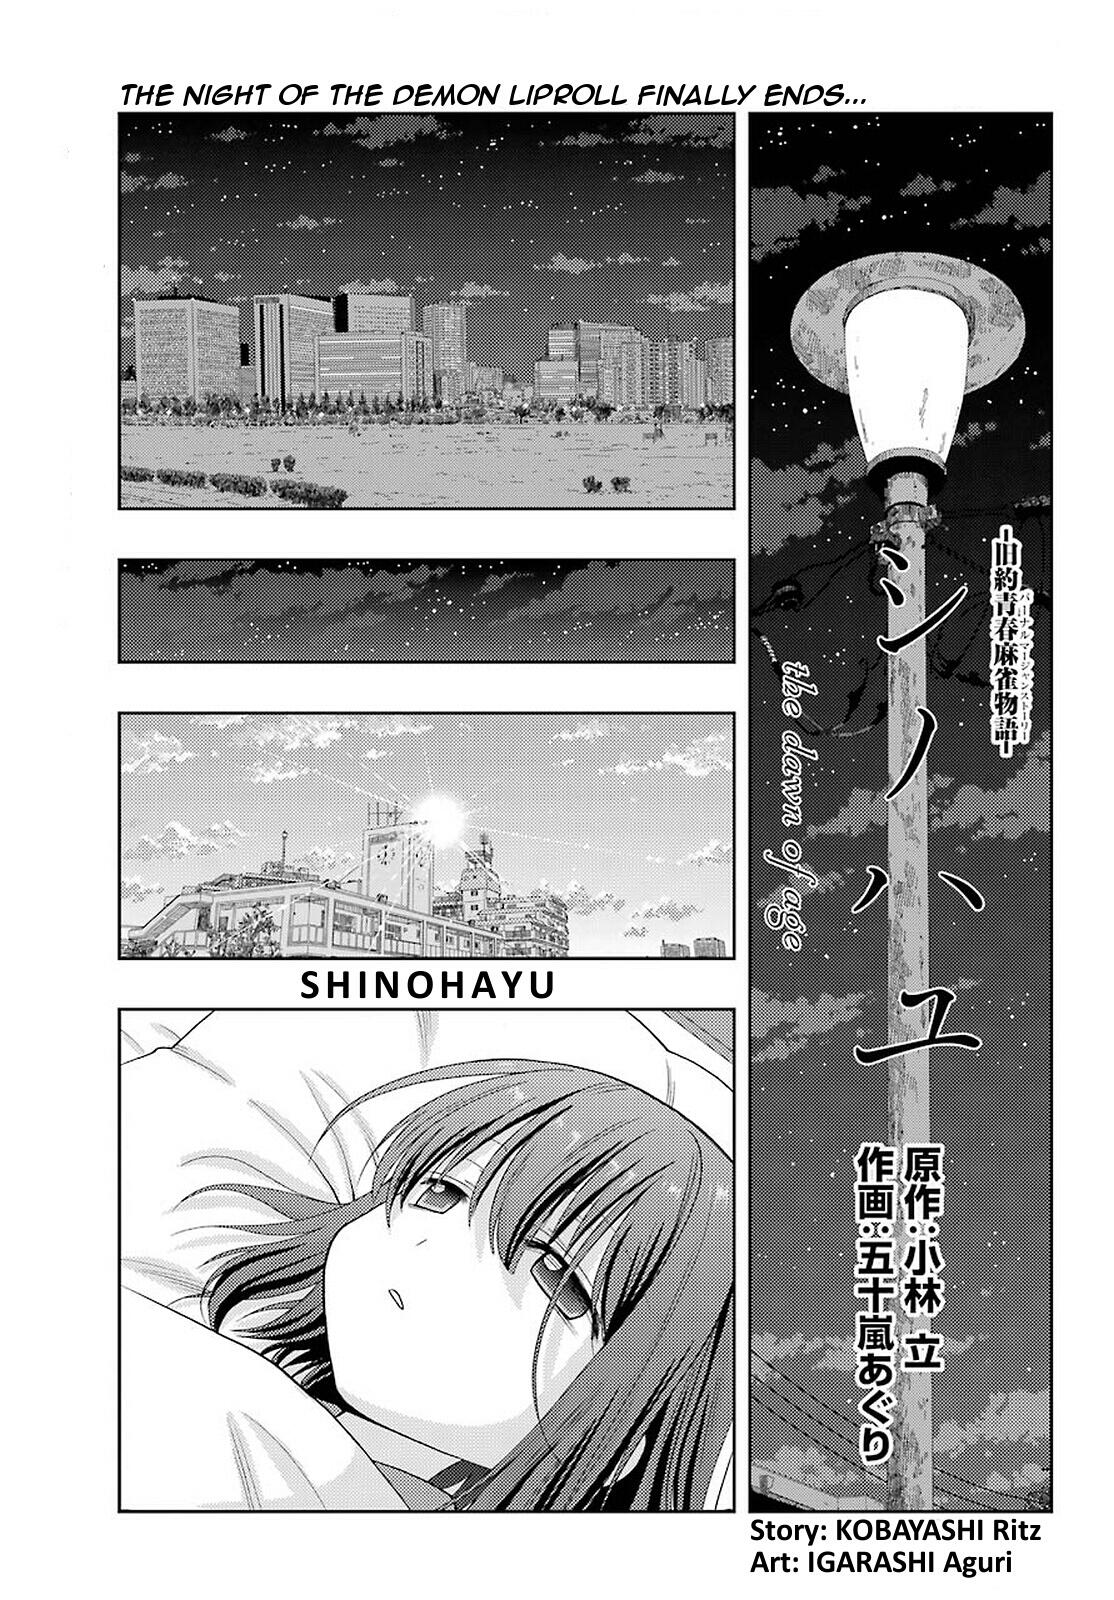 Read Shinohayu - The Dawn Of Age Chapter 30 : City Tournament on  Mangakakalot